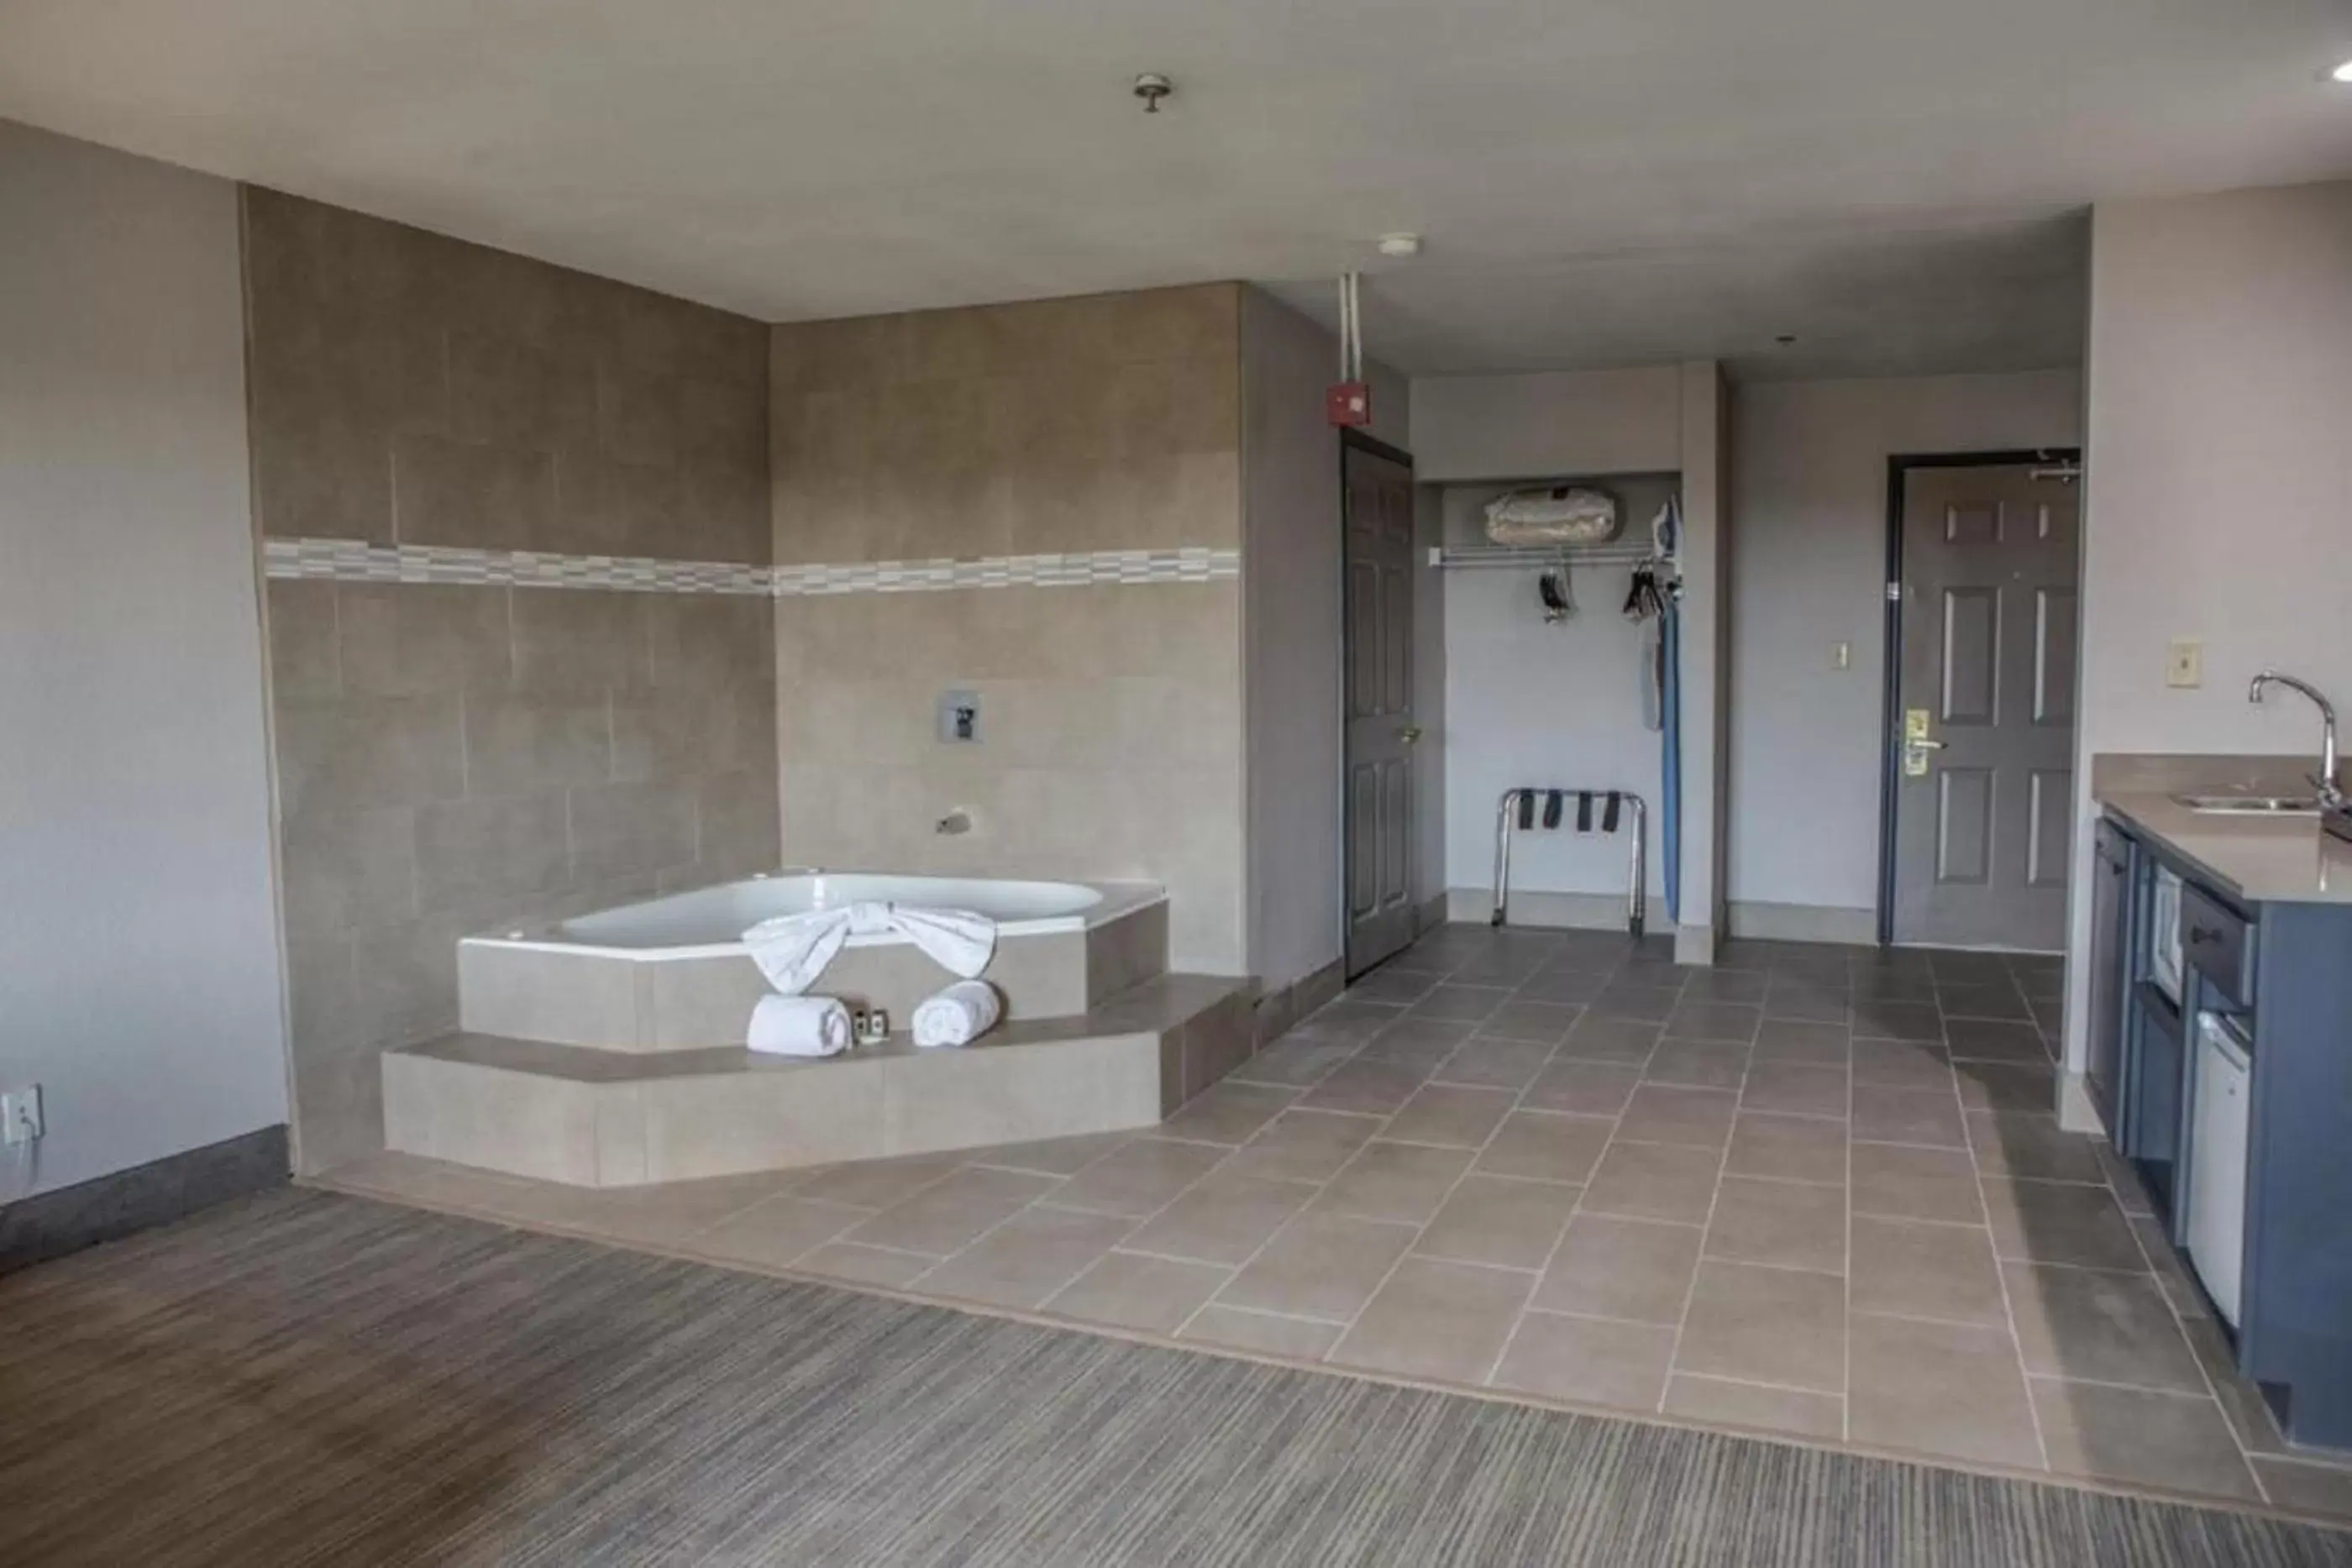 Bathroom in Country Inn & Suites by Radisson, Harlingen, TX